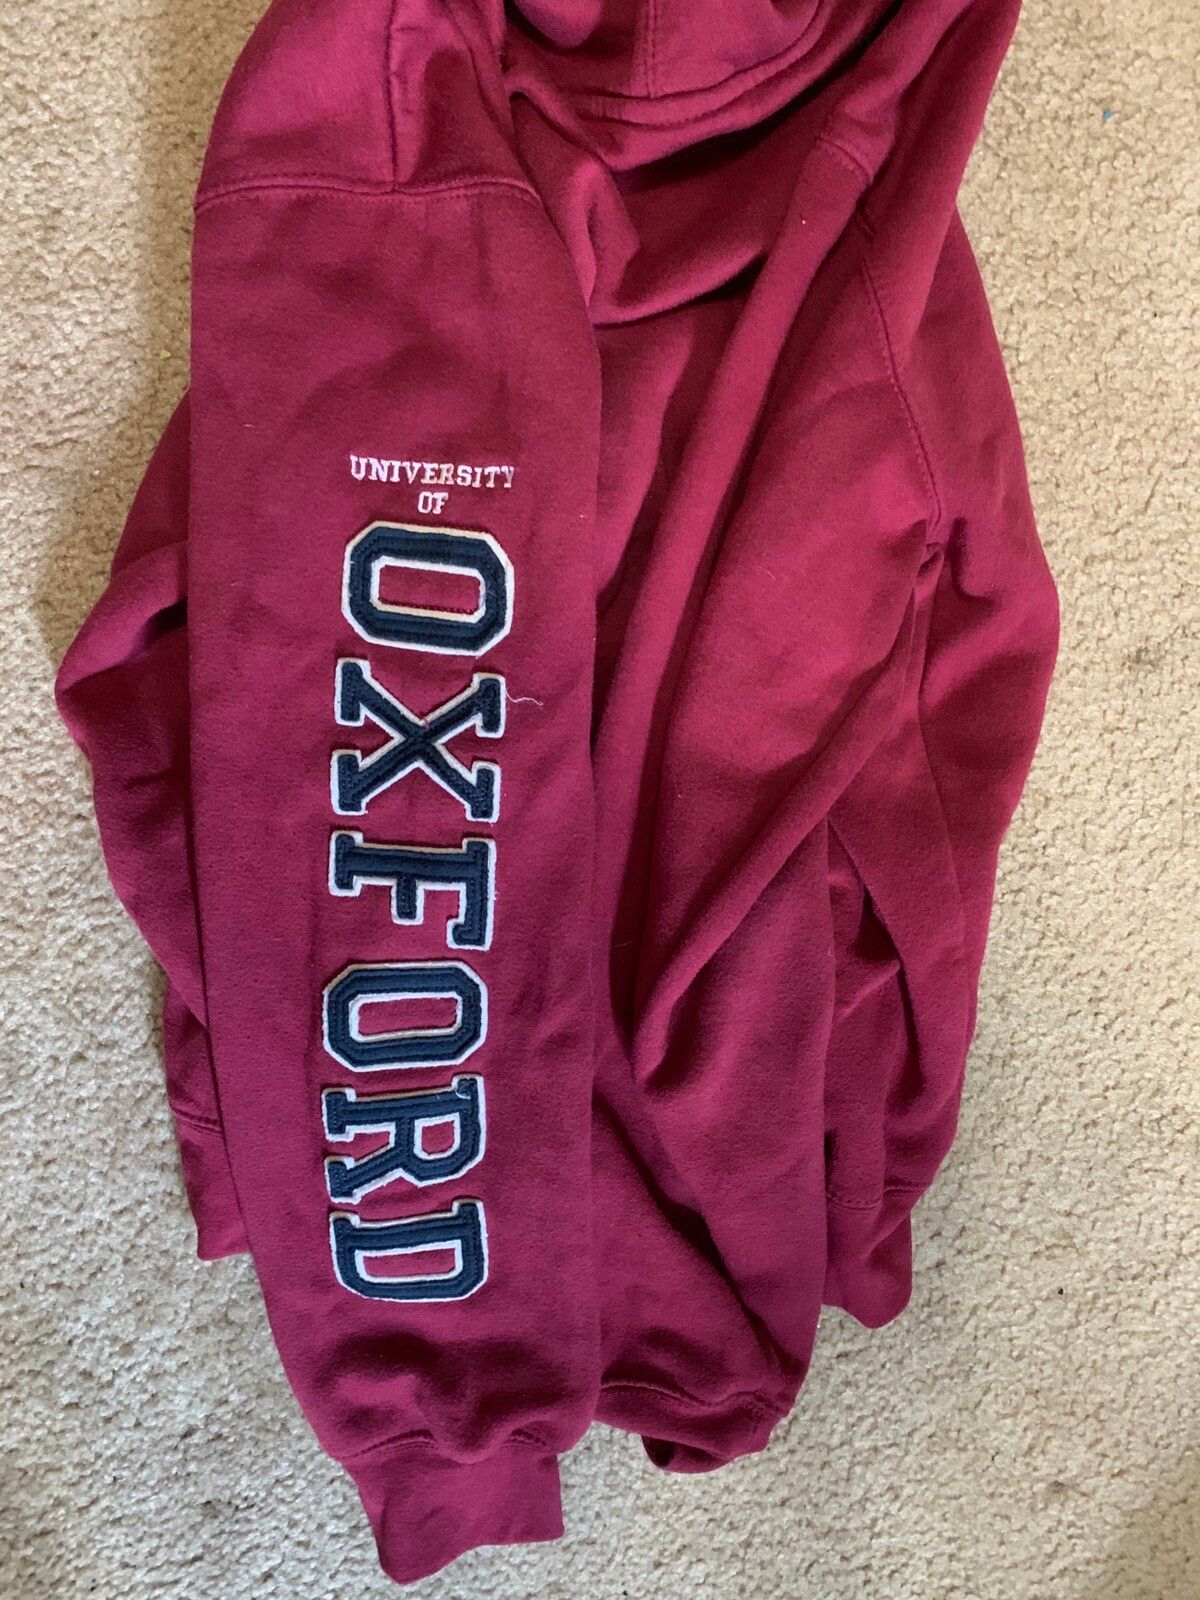 Vintage Oxford University Hoodie Sweatshirt Zip-Up Size US L / EU 52-54 / 3 - 6 Preview